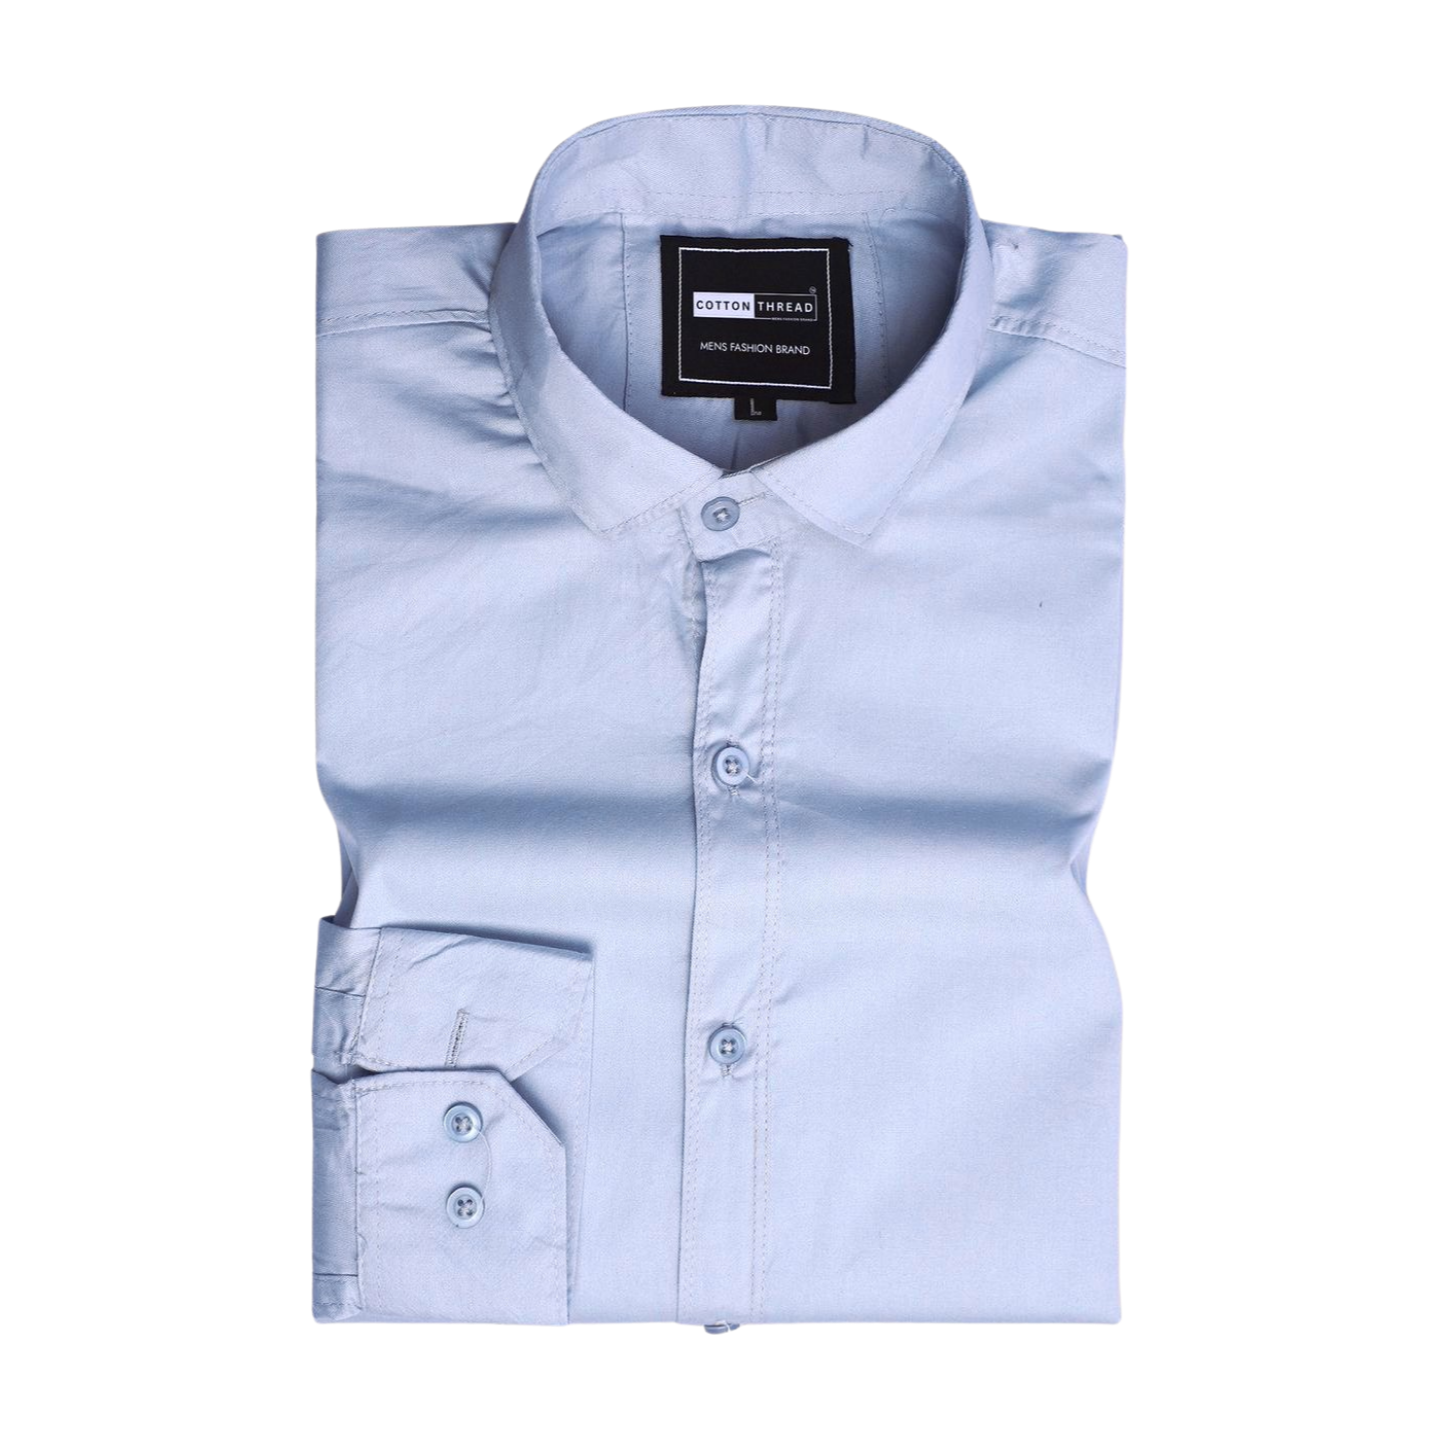 Men's Premium Formal Cotton Full Sleeve Grey Solid Shirt By Cotton Thread (PLN-005)